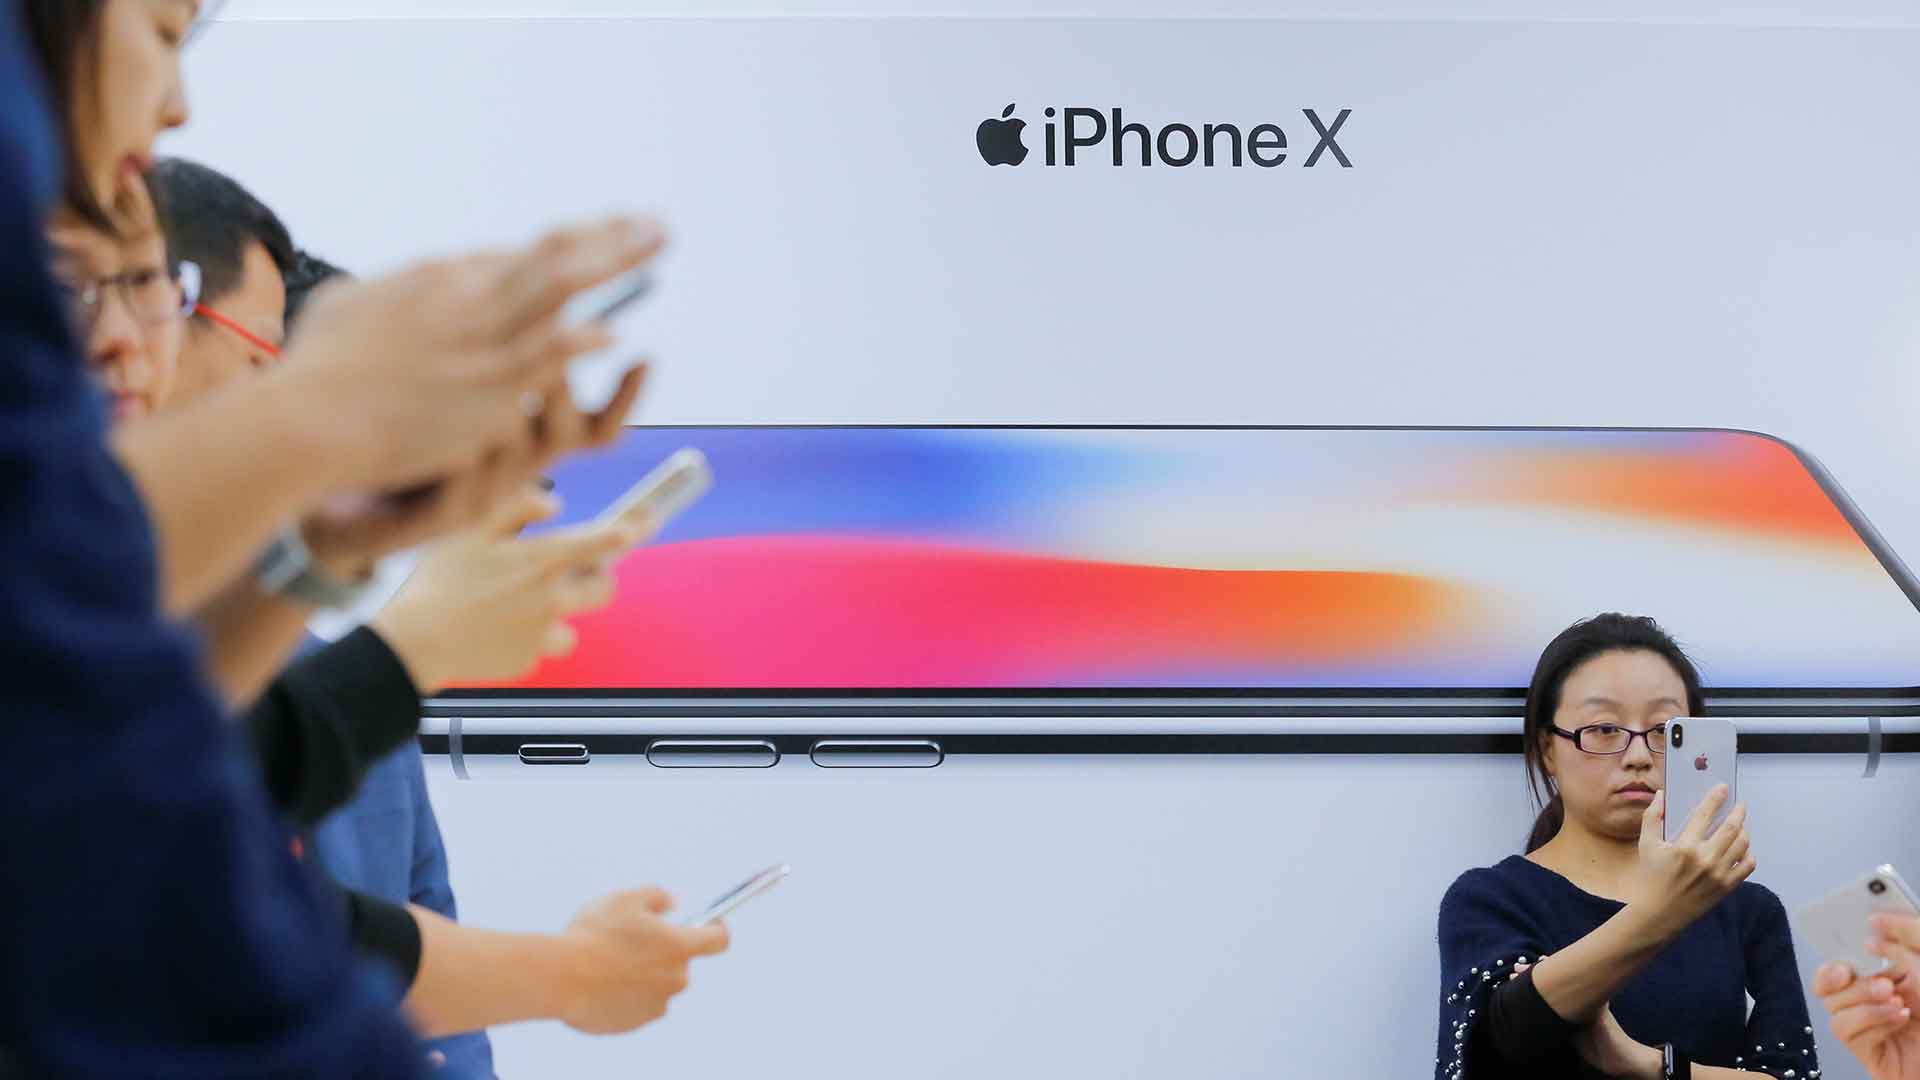 Apple reconoce el empleo irregular de estudiantes para fabricar el iPhone X en China